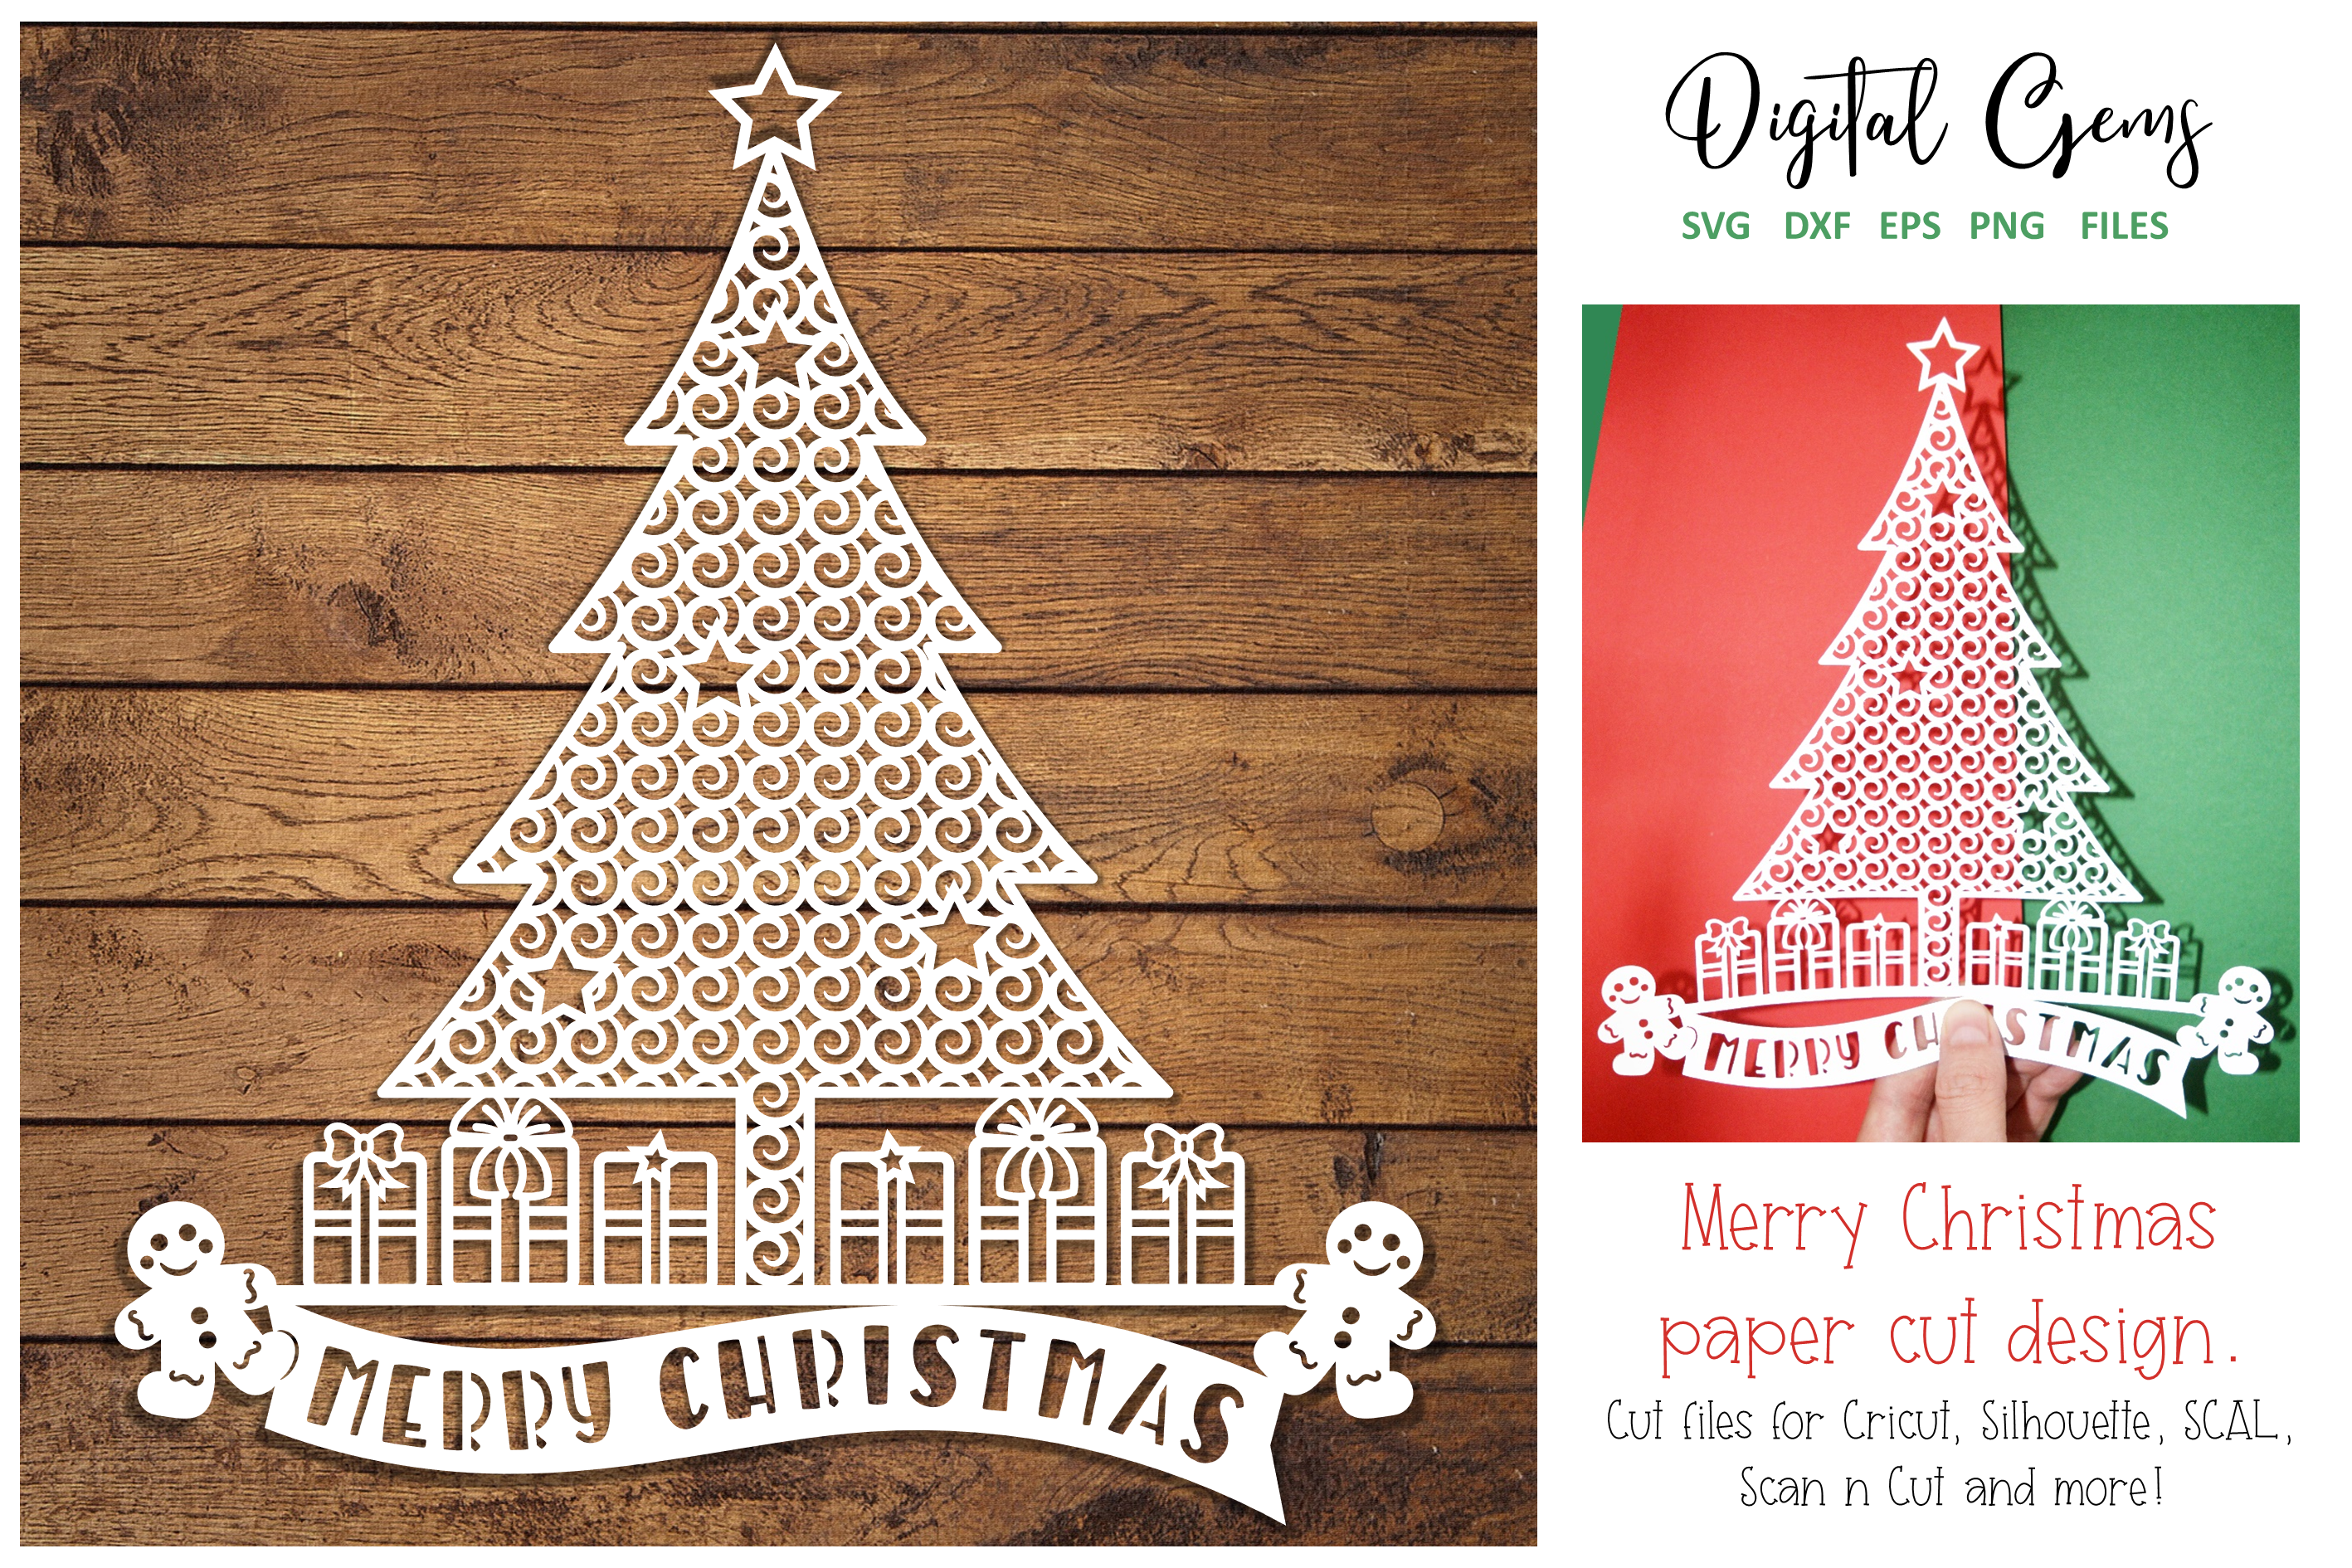 Christmas Tree Papercut Design By Digital Gems Thehungryjpeg Com